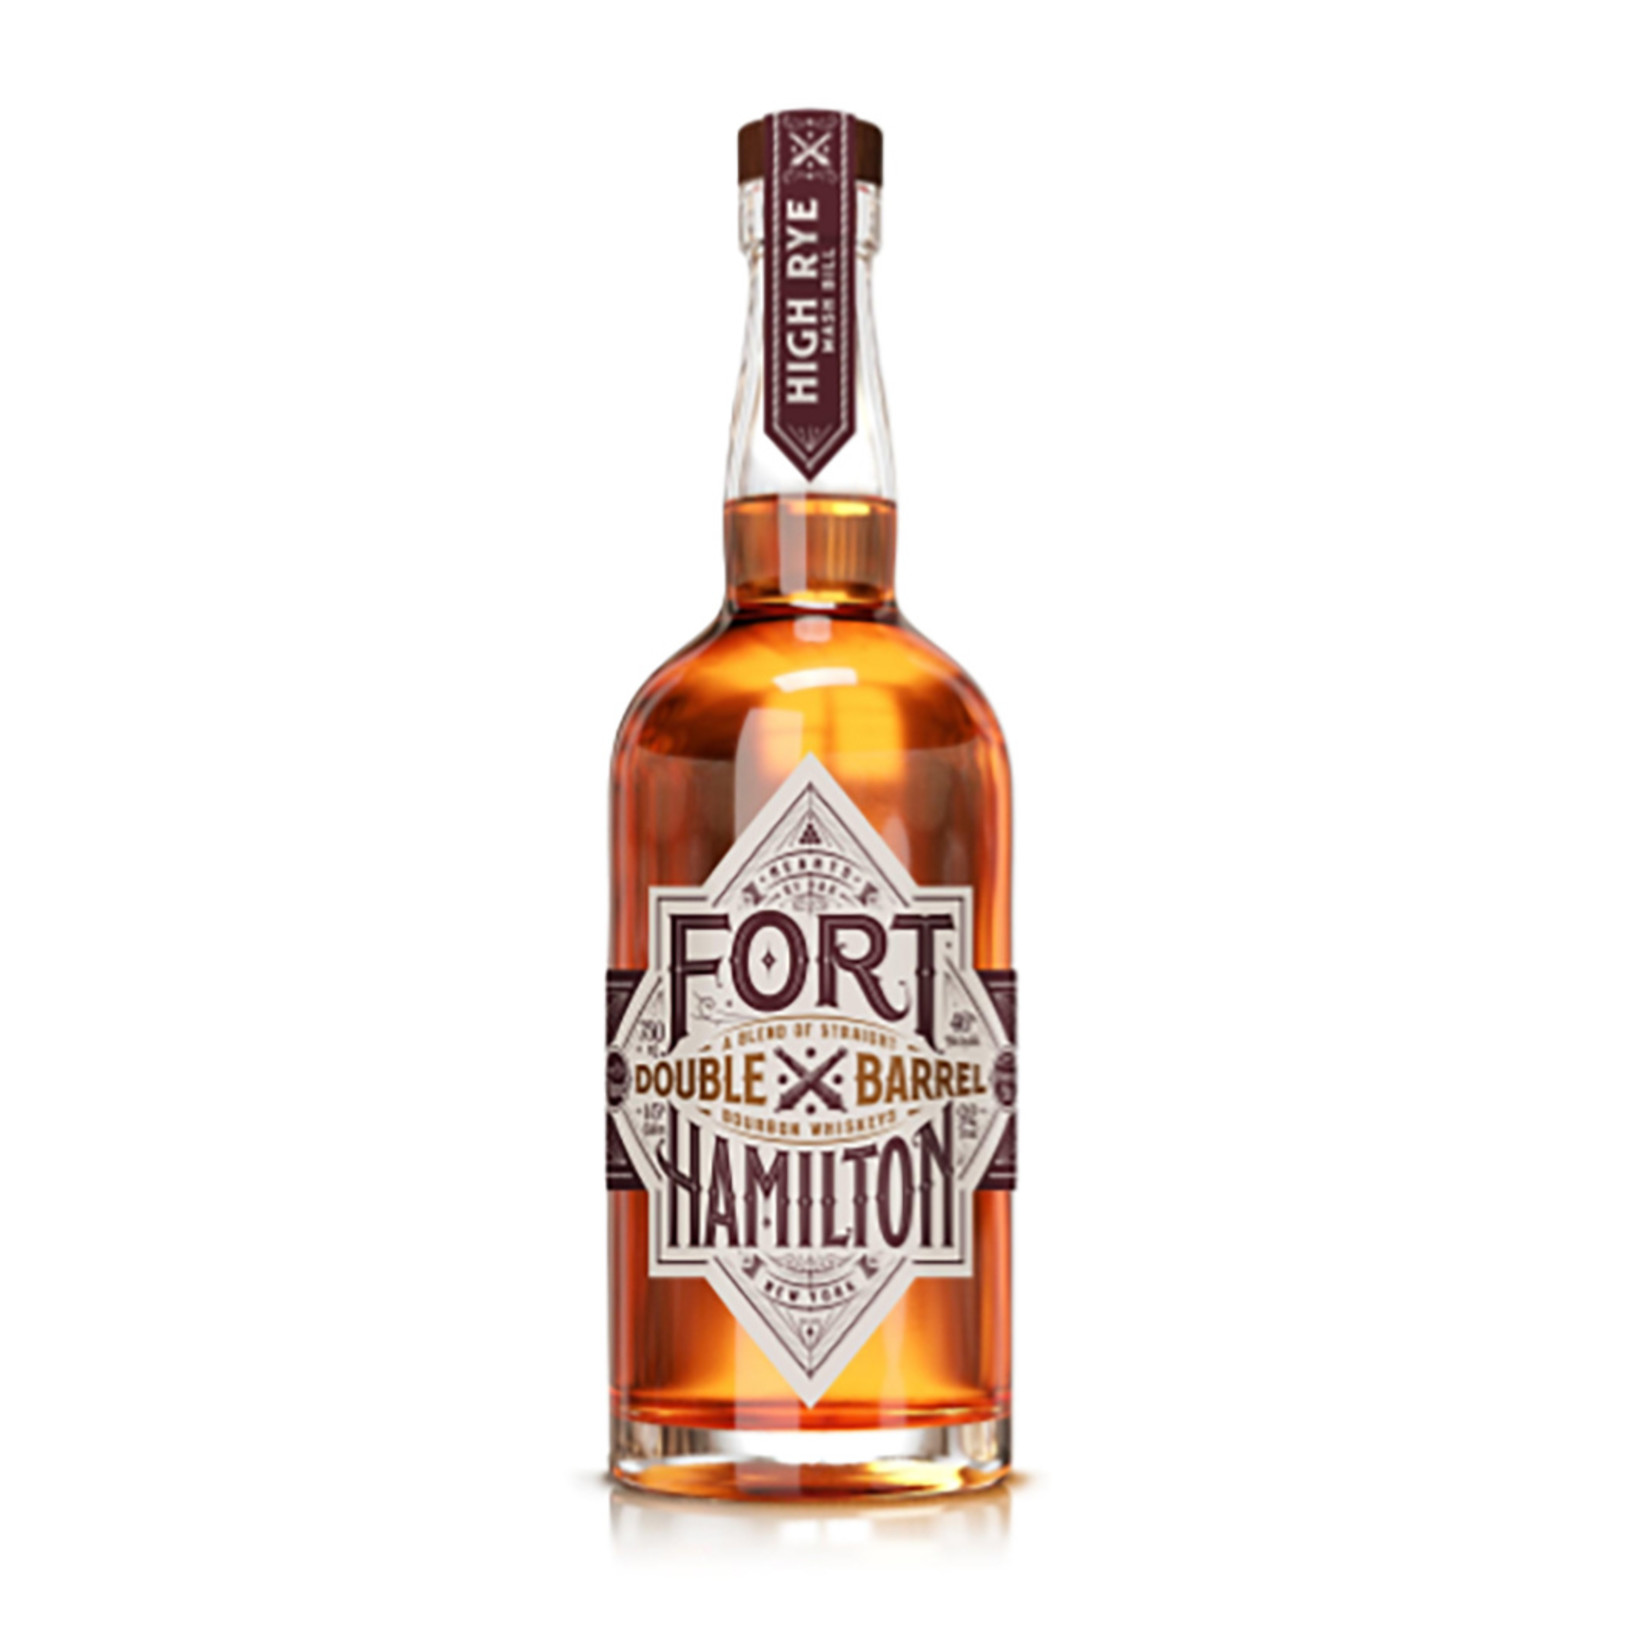 Fort Hamilton, Double Barrel Bourbon